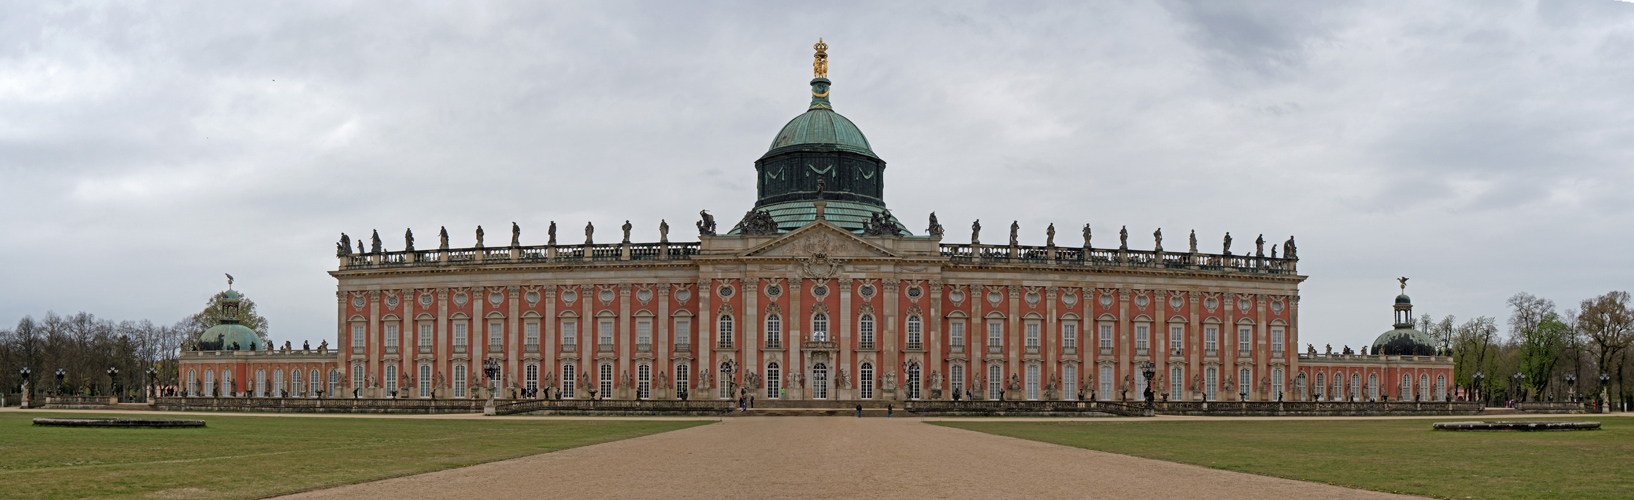 Neues Palais - Potsdam